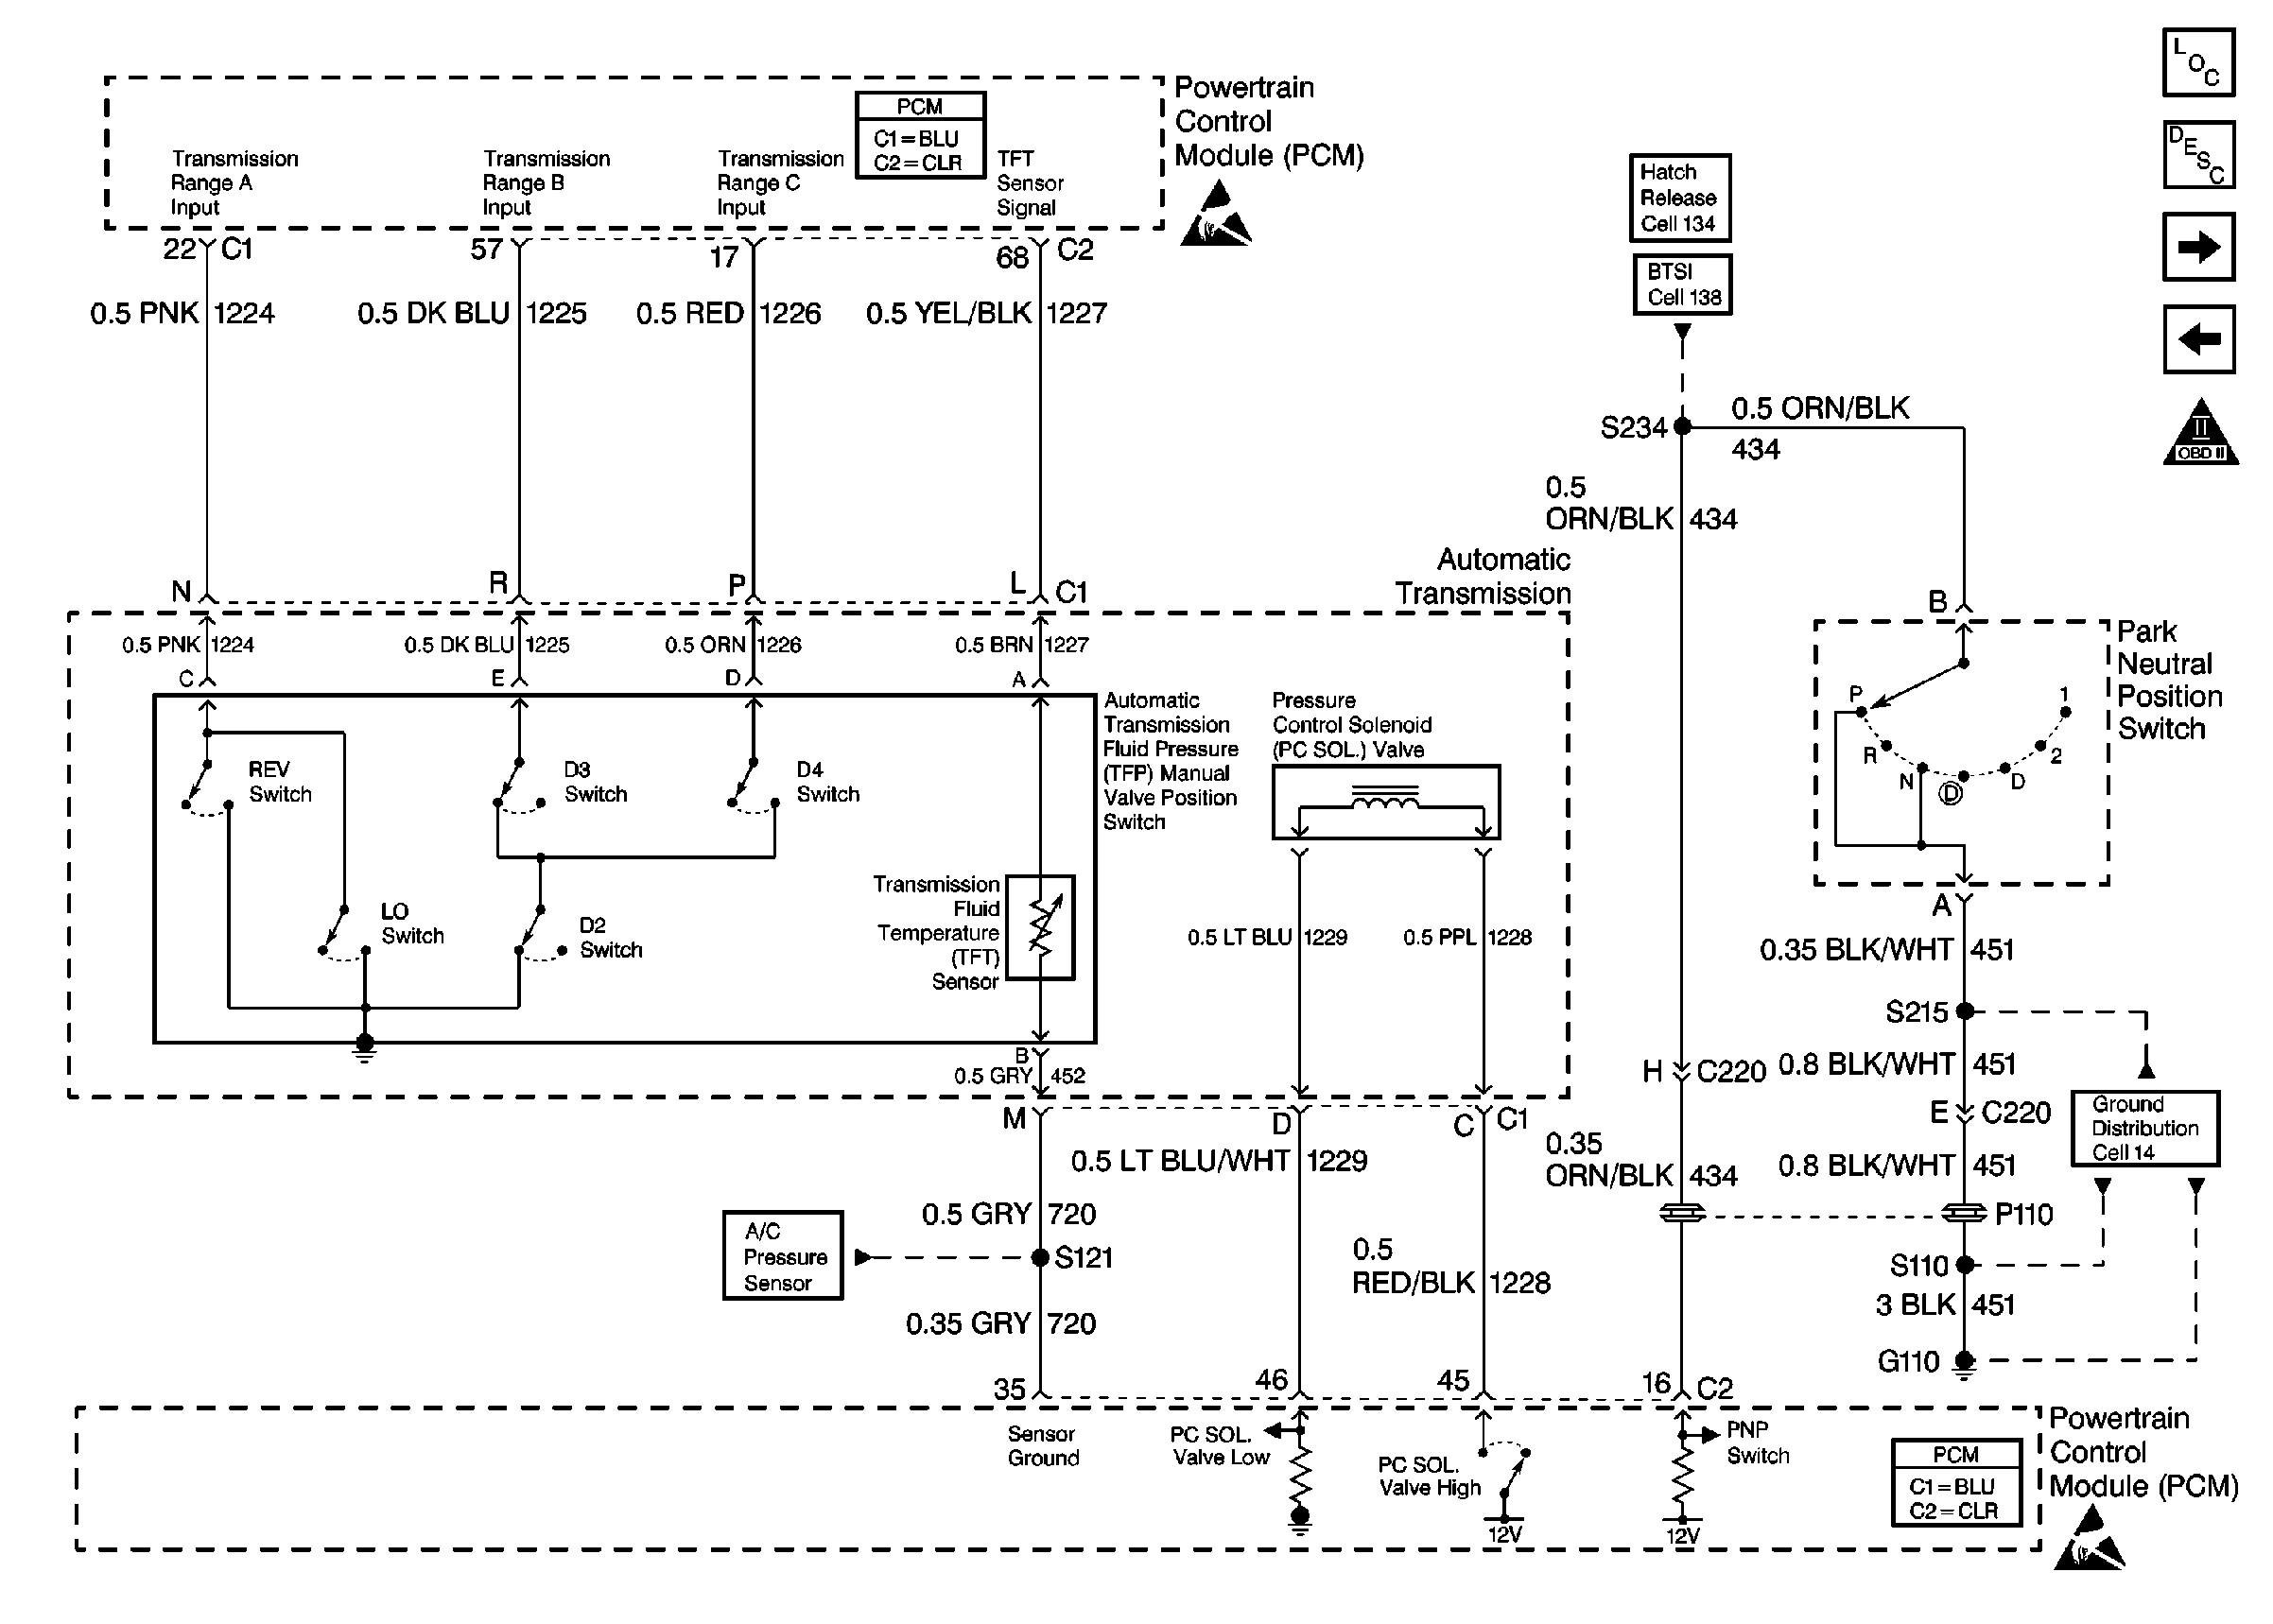 1992 camaro 5 speed vss wiring diagram